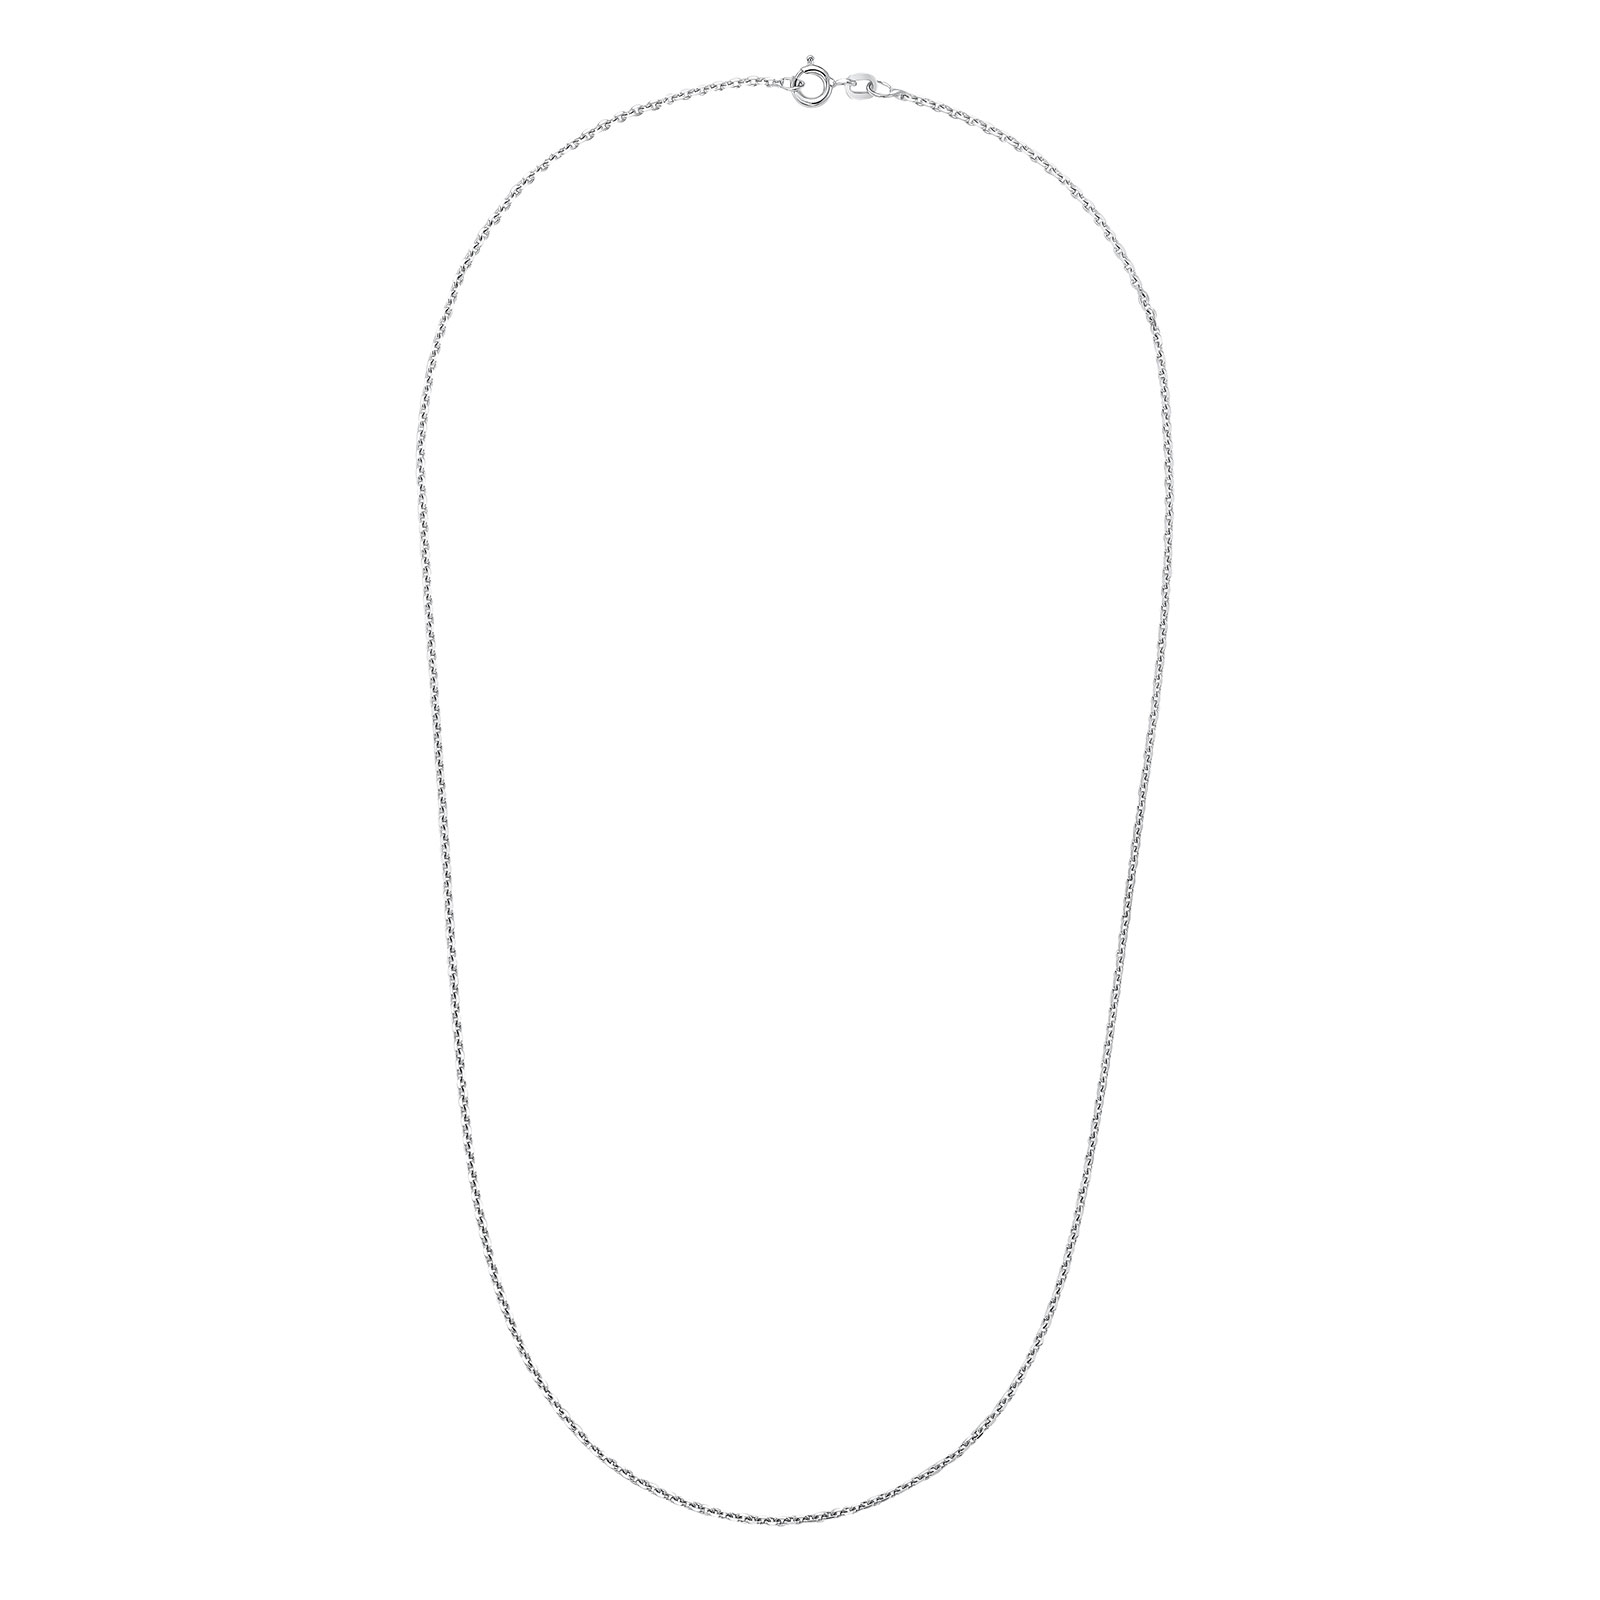 Halsband Sterling Silver 925 - Ankarlänk, 50 cm